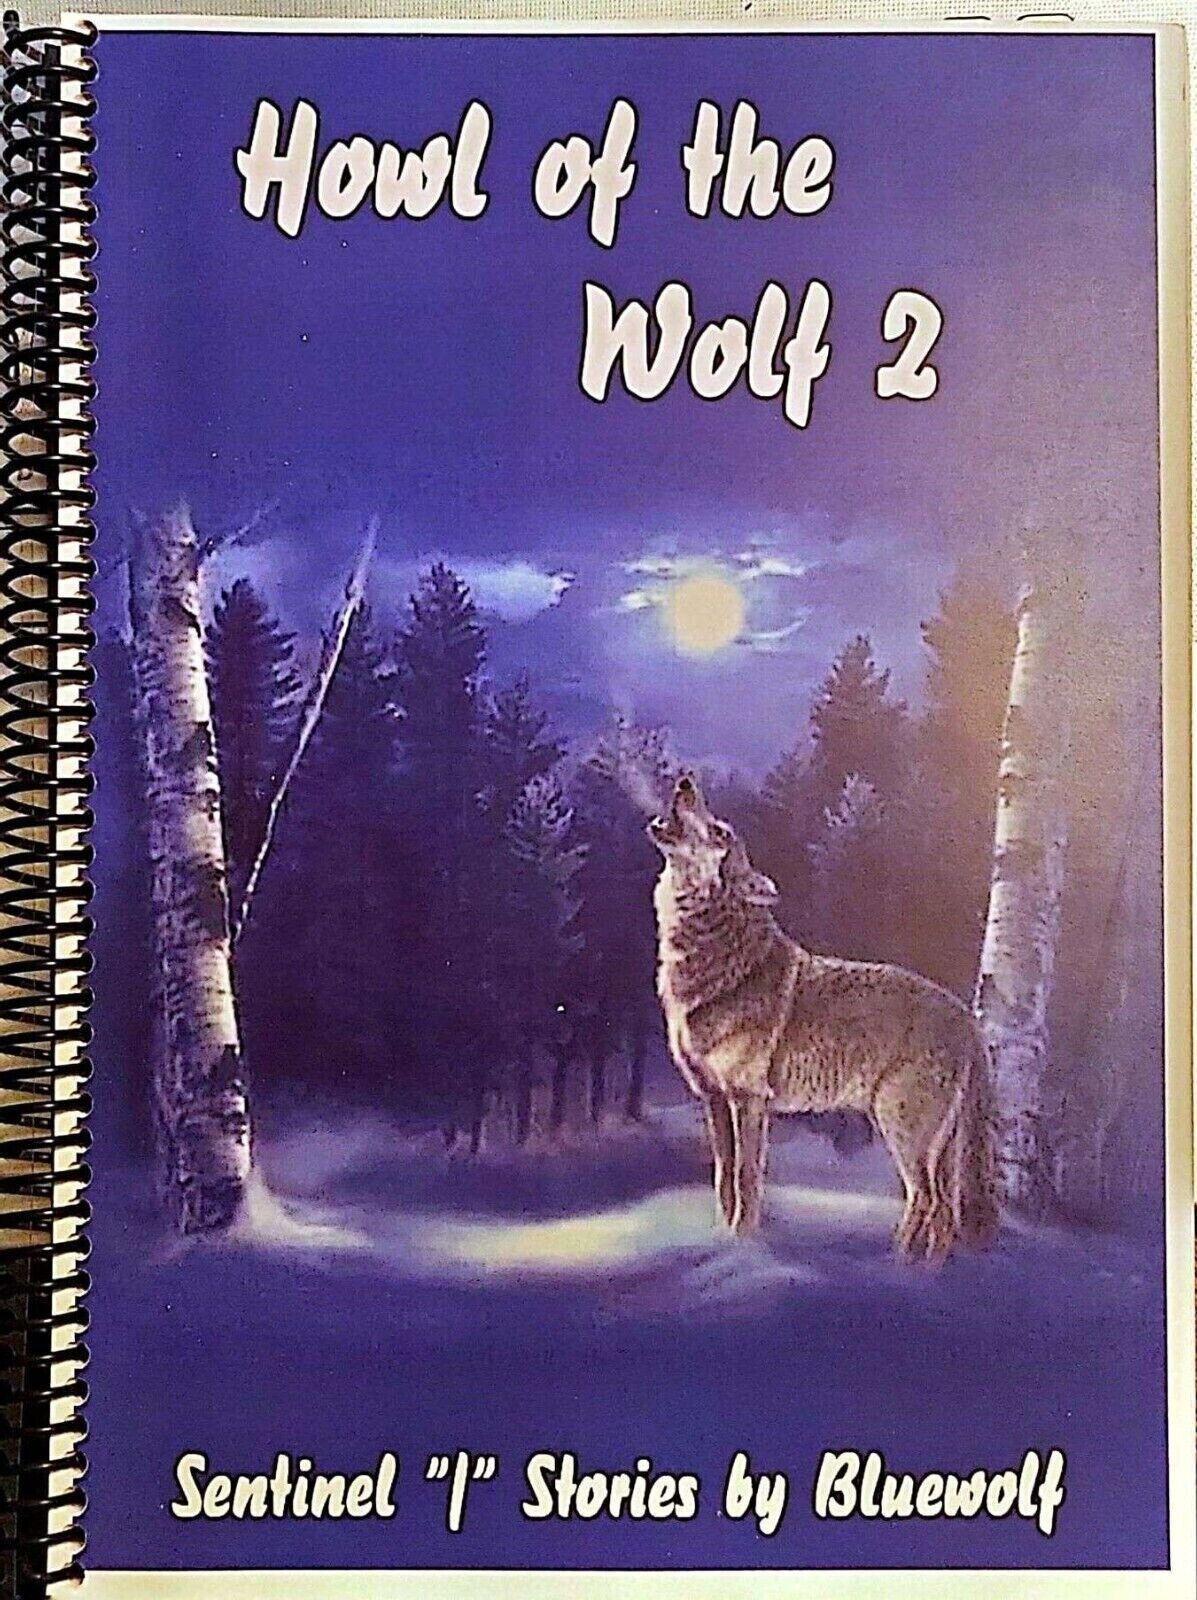 Sentinel Slash Novel Fanzine Howl of the Wolf #2 2005